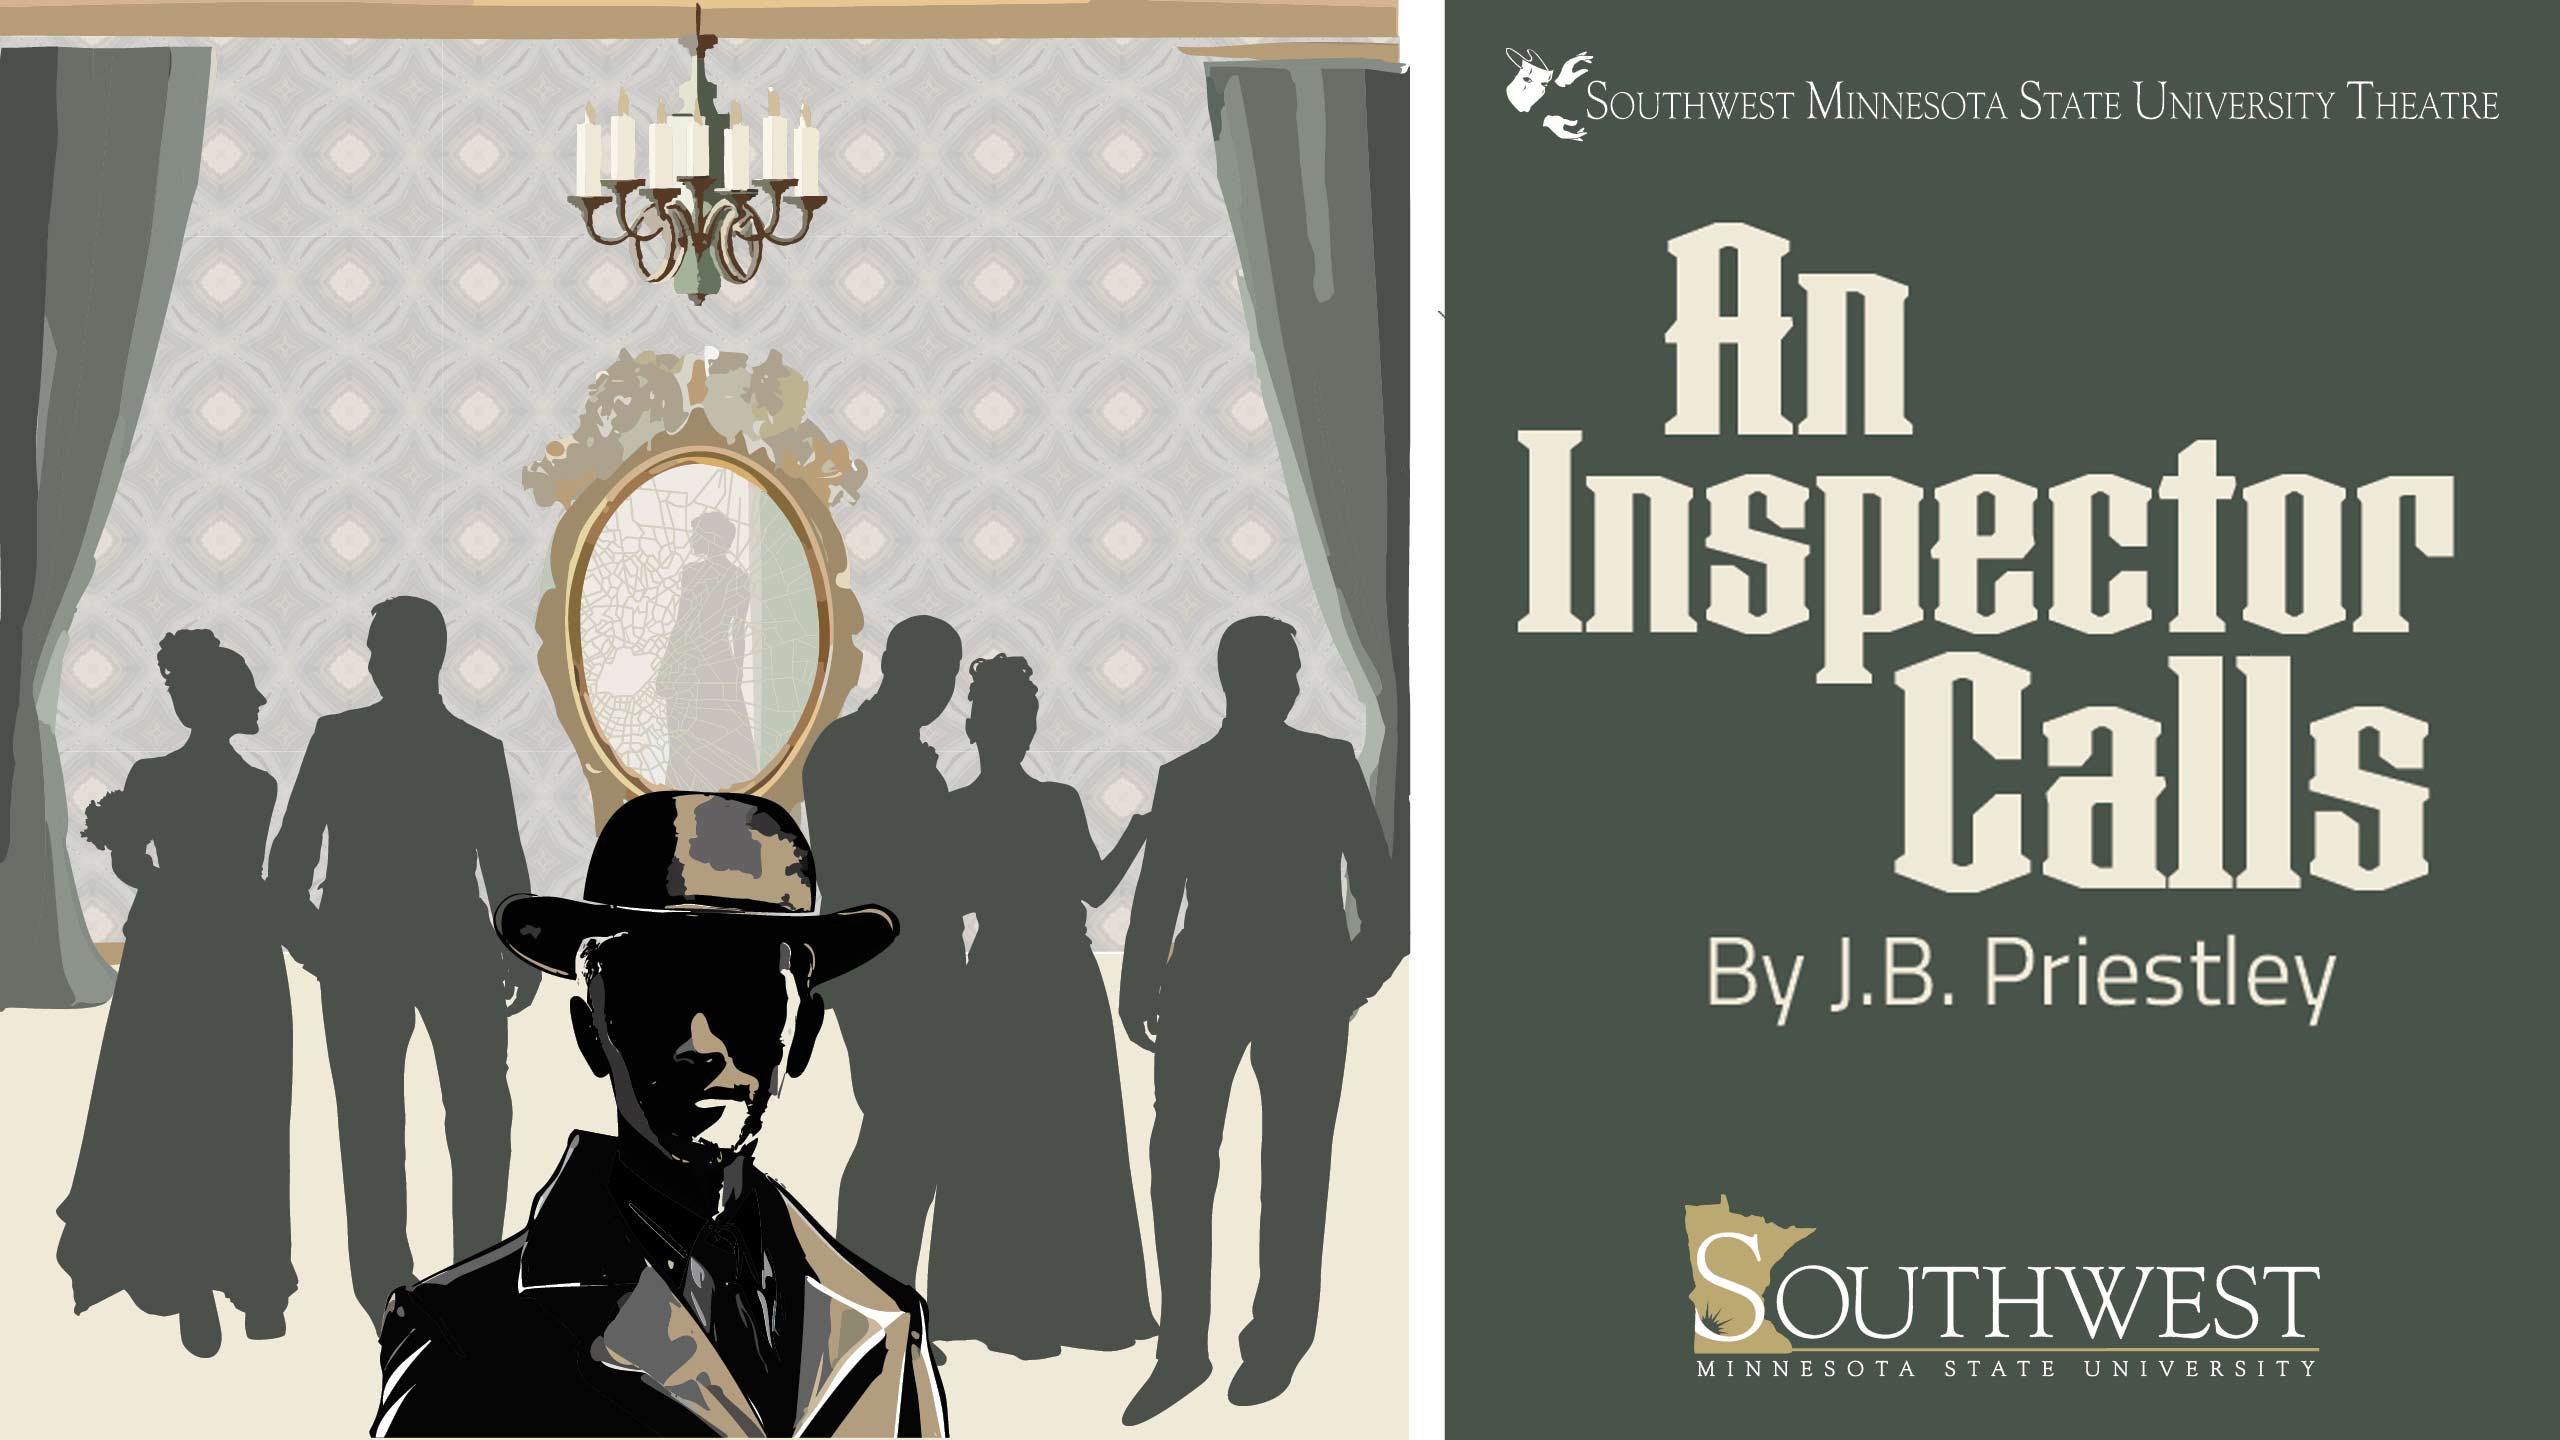 SMSU Theatre Presents "An Inspector Calls" April 10-14 Featured Image